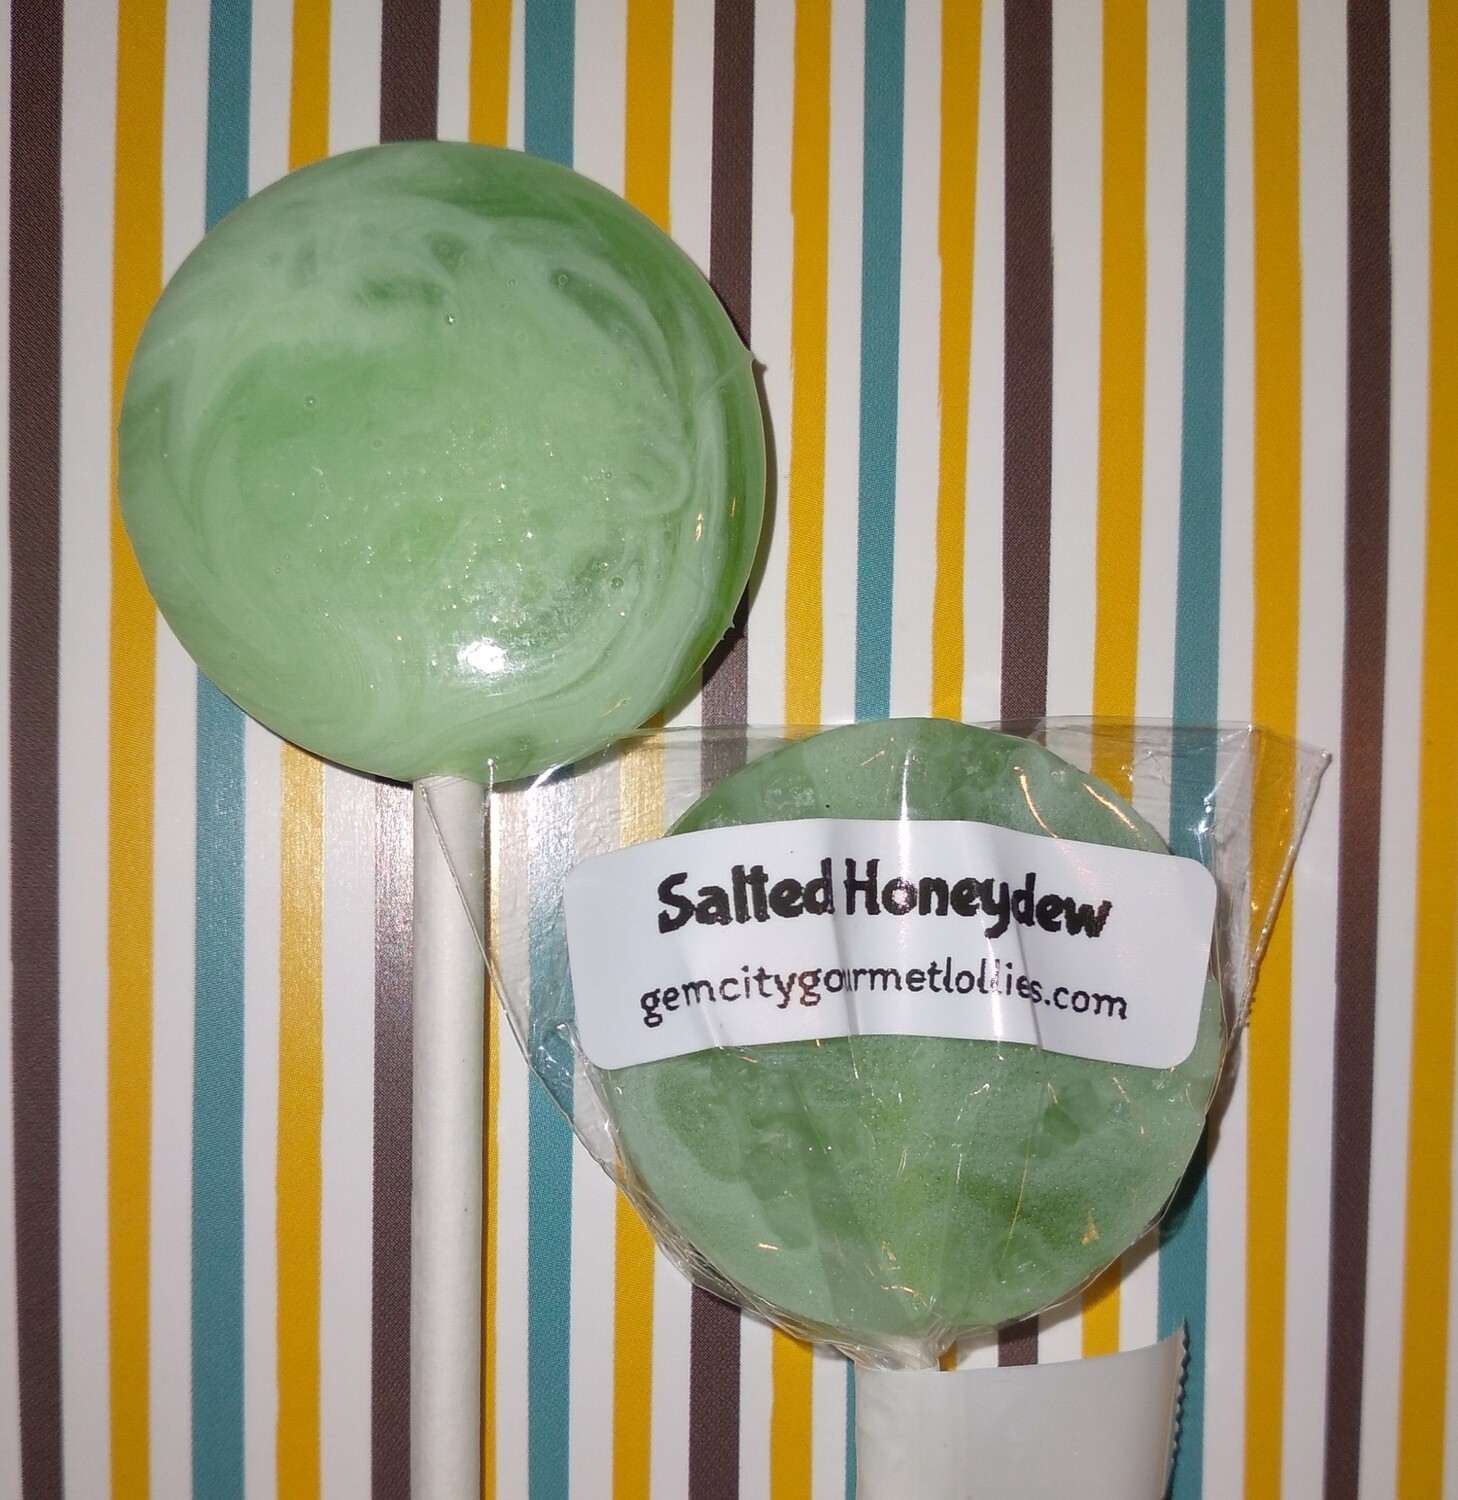 Salted Honeydew Lollipop